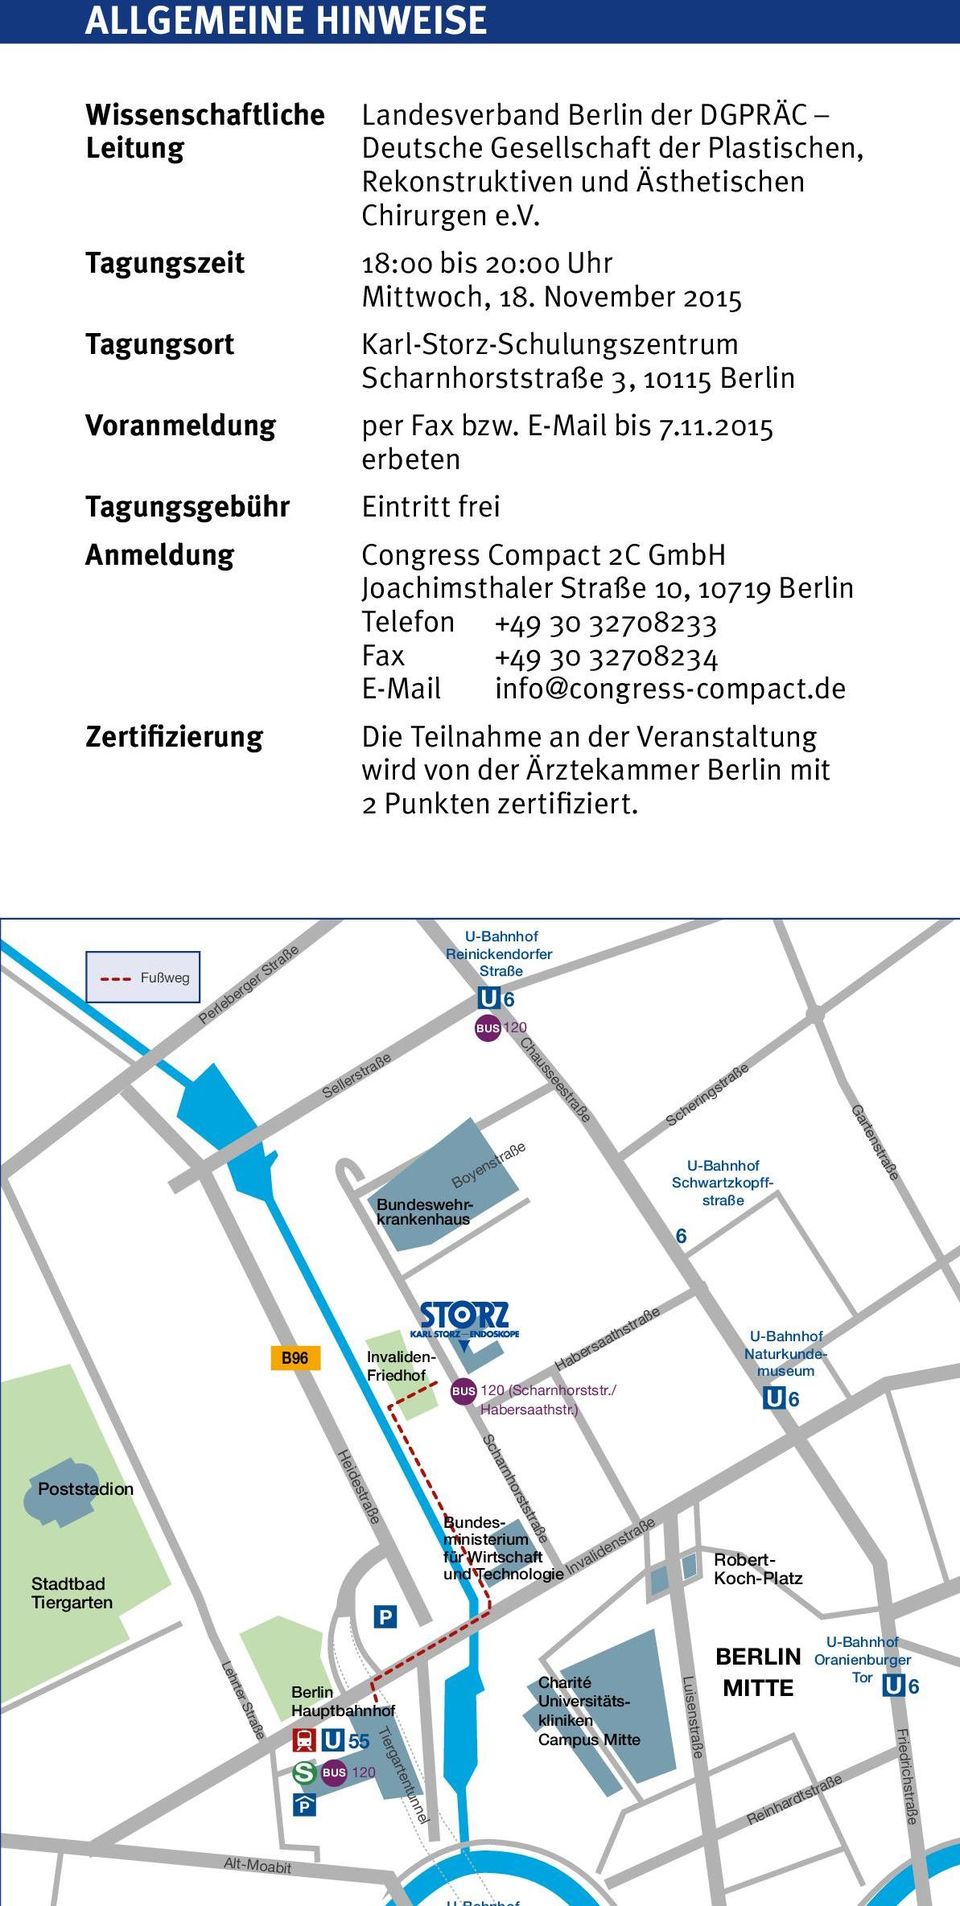 Berlin Voranmeldung per Fax bzw. E-Mail bis 7.11.